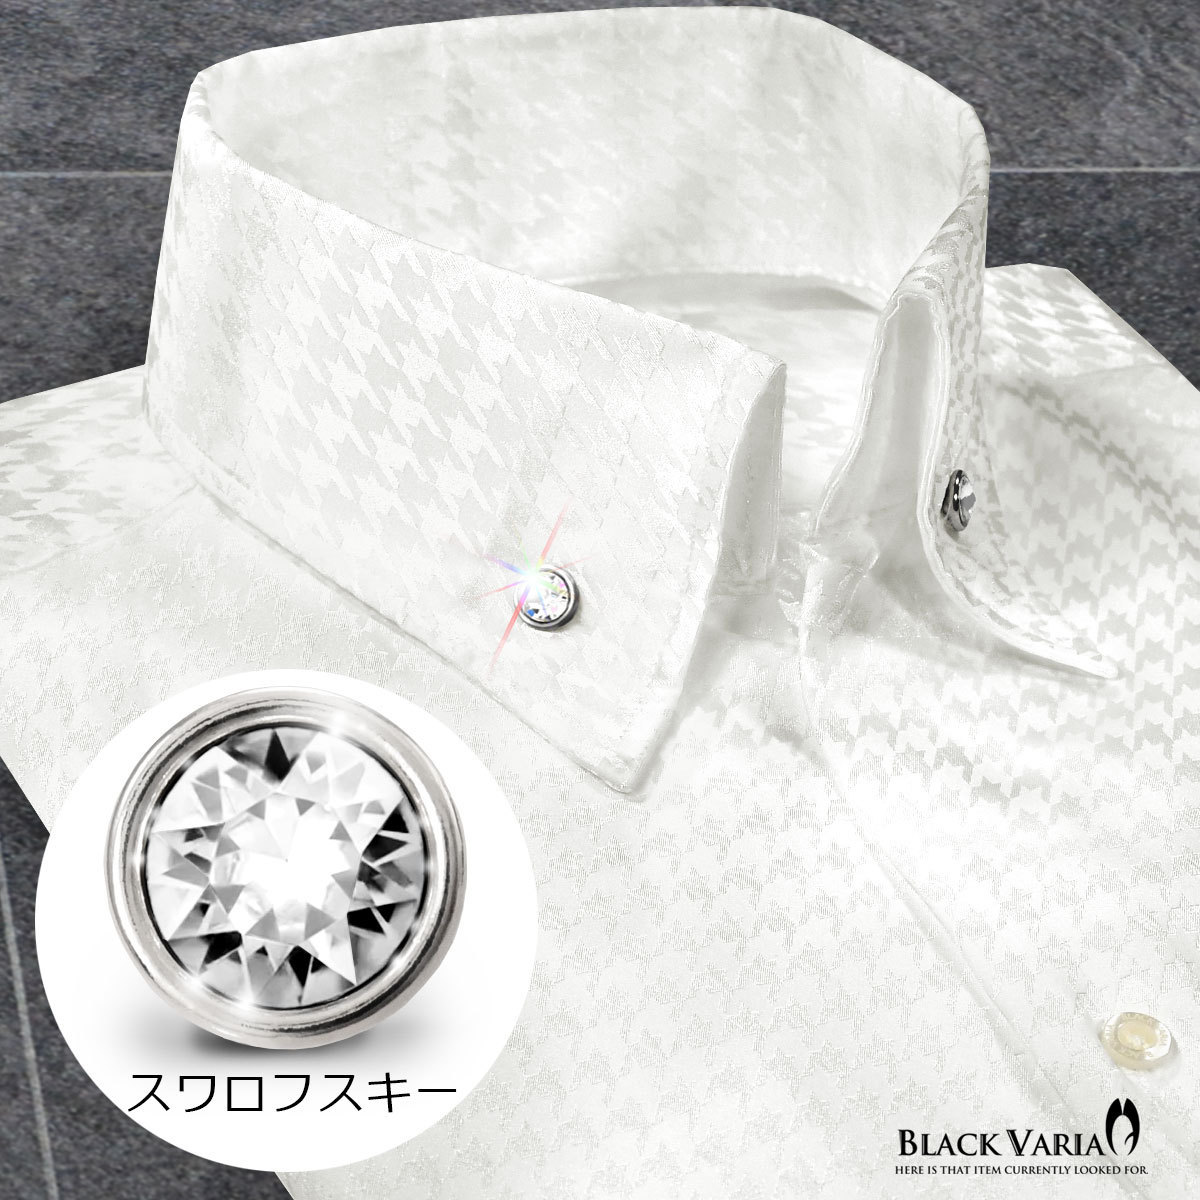 191255-whS BLACK VARIA ジャガード千鳥柄 スキッパー スワロフスキーBD ドレスシャツ スリム メンズ(クリスタル釦・ホワイト白) XL_襟元ボタンはクリスタル釦です